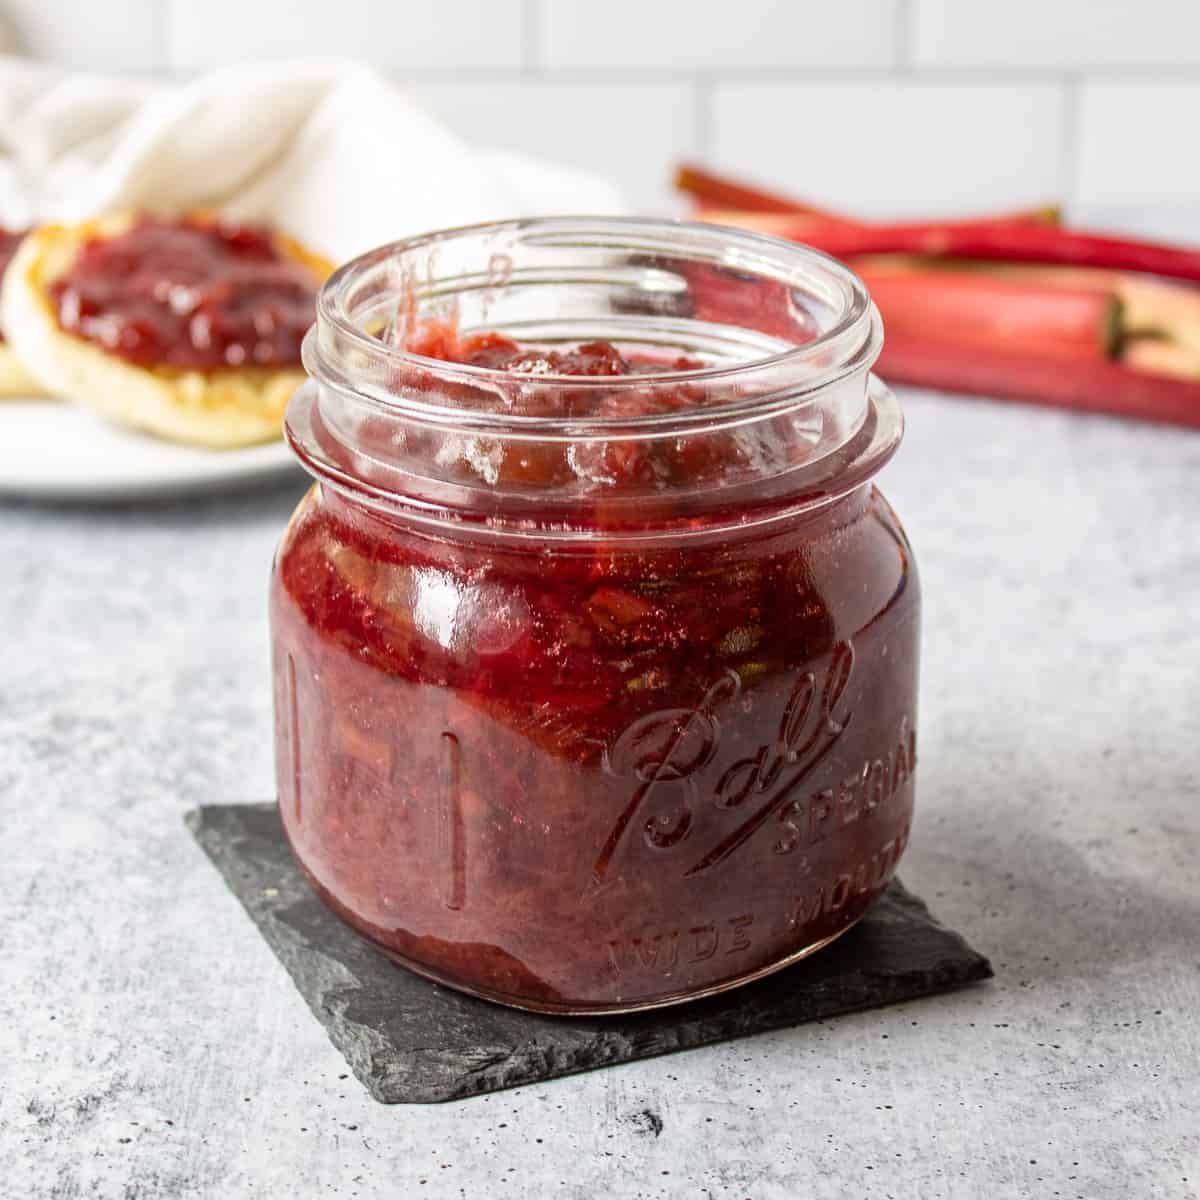 A glass jar filled with homemade rhubarb jam.